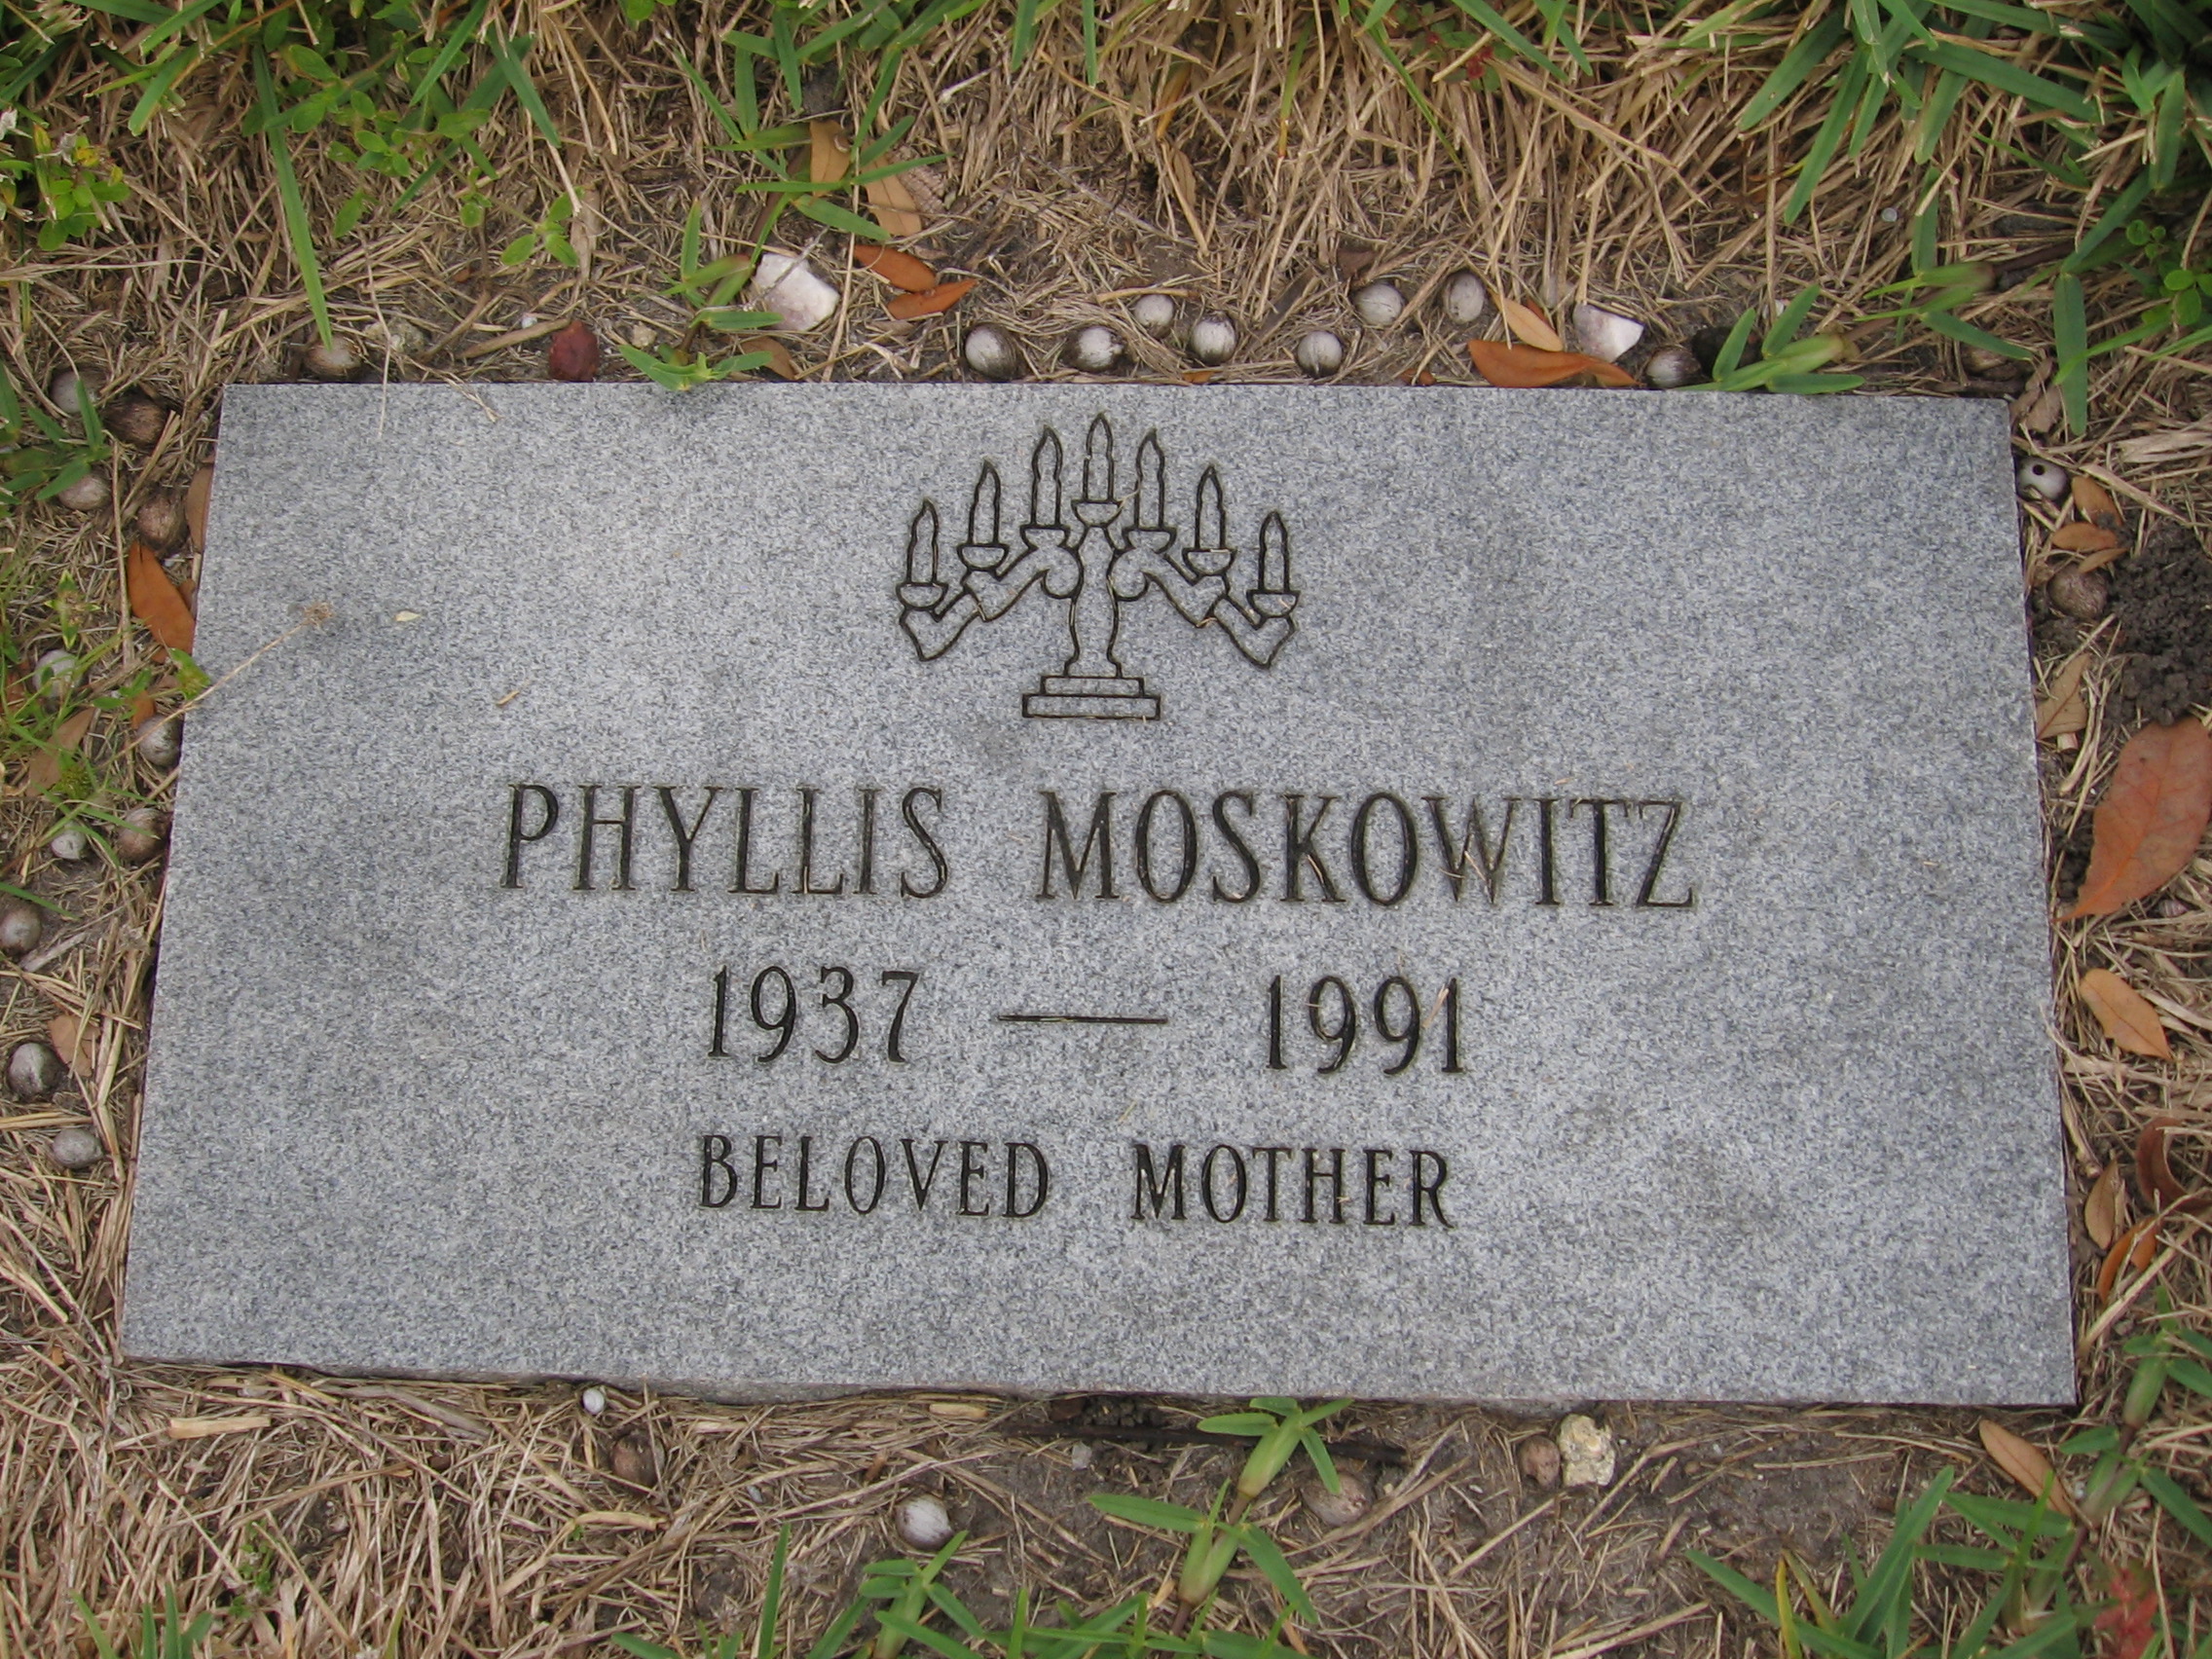 Phyllis Moskowitz